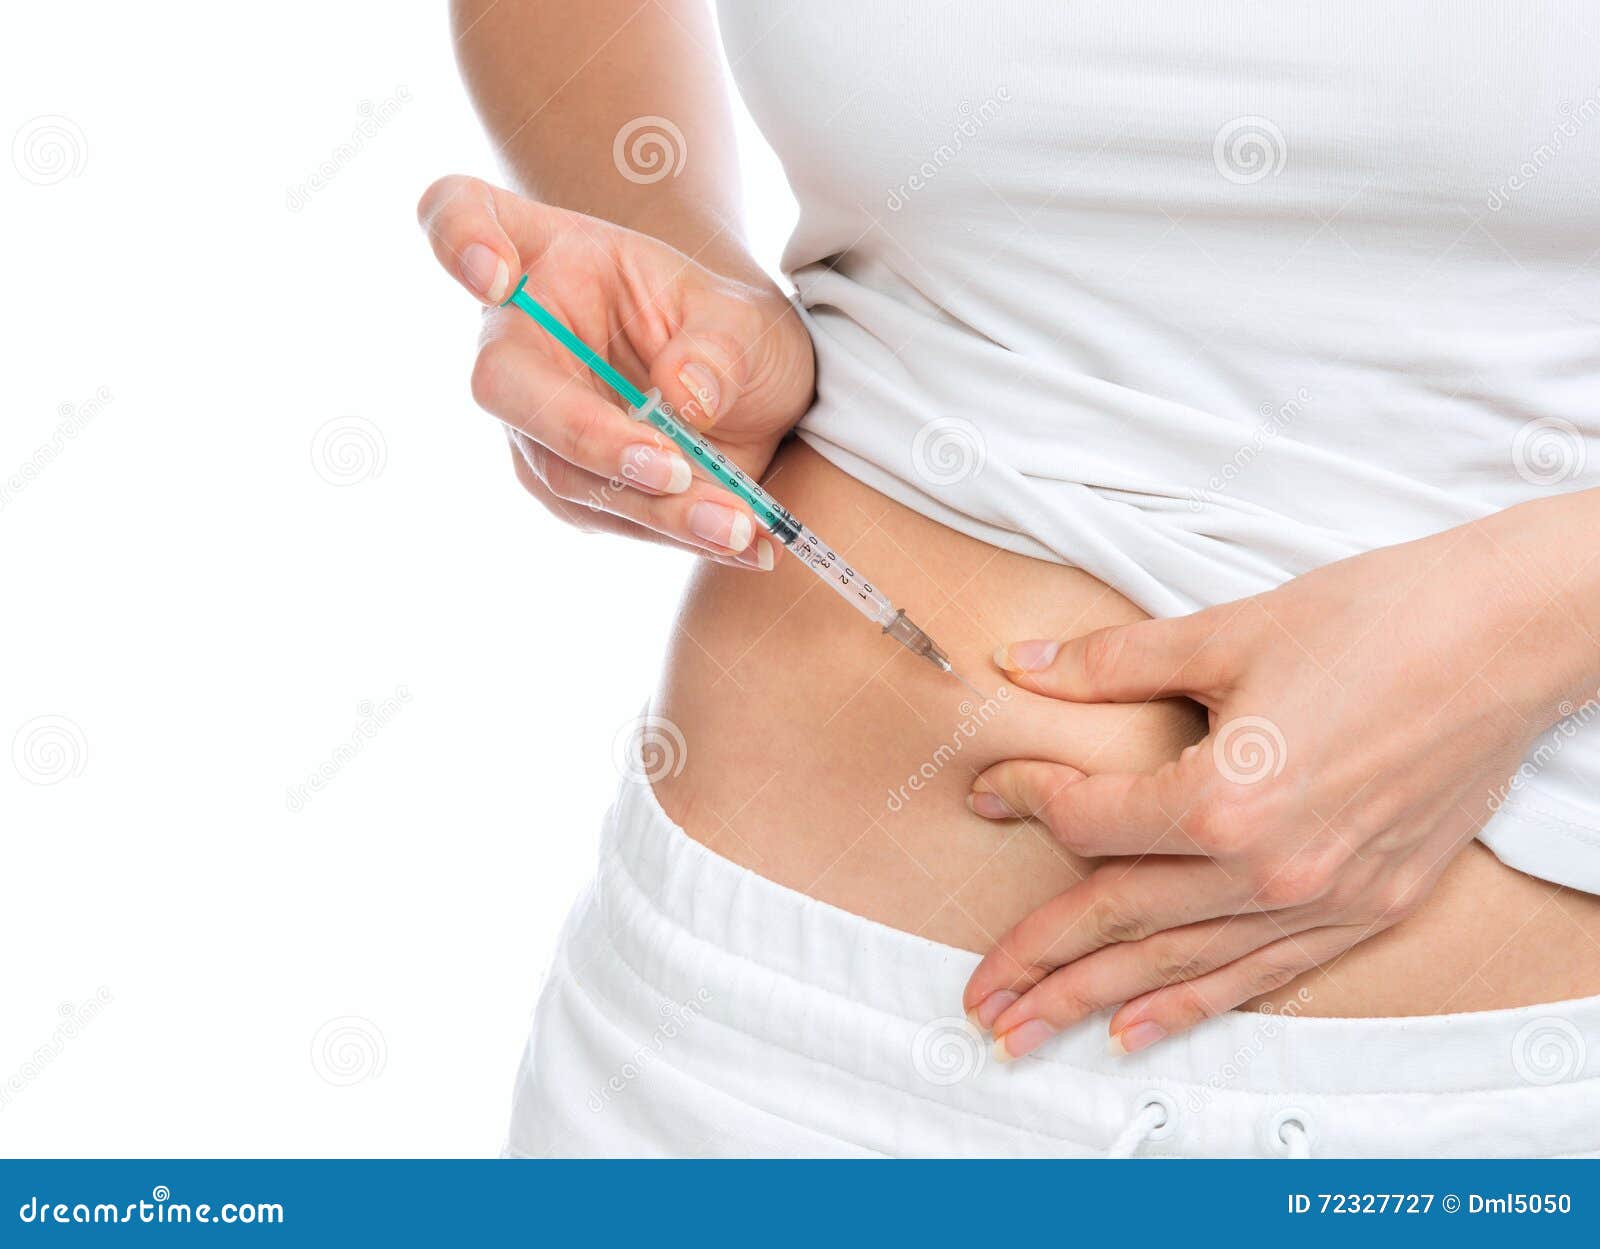 medical diabetes insulin syringe injection shot into abdomen wit